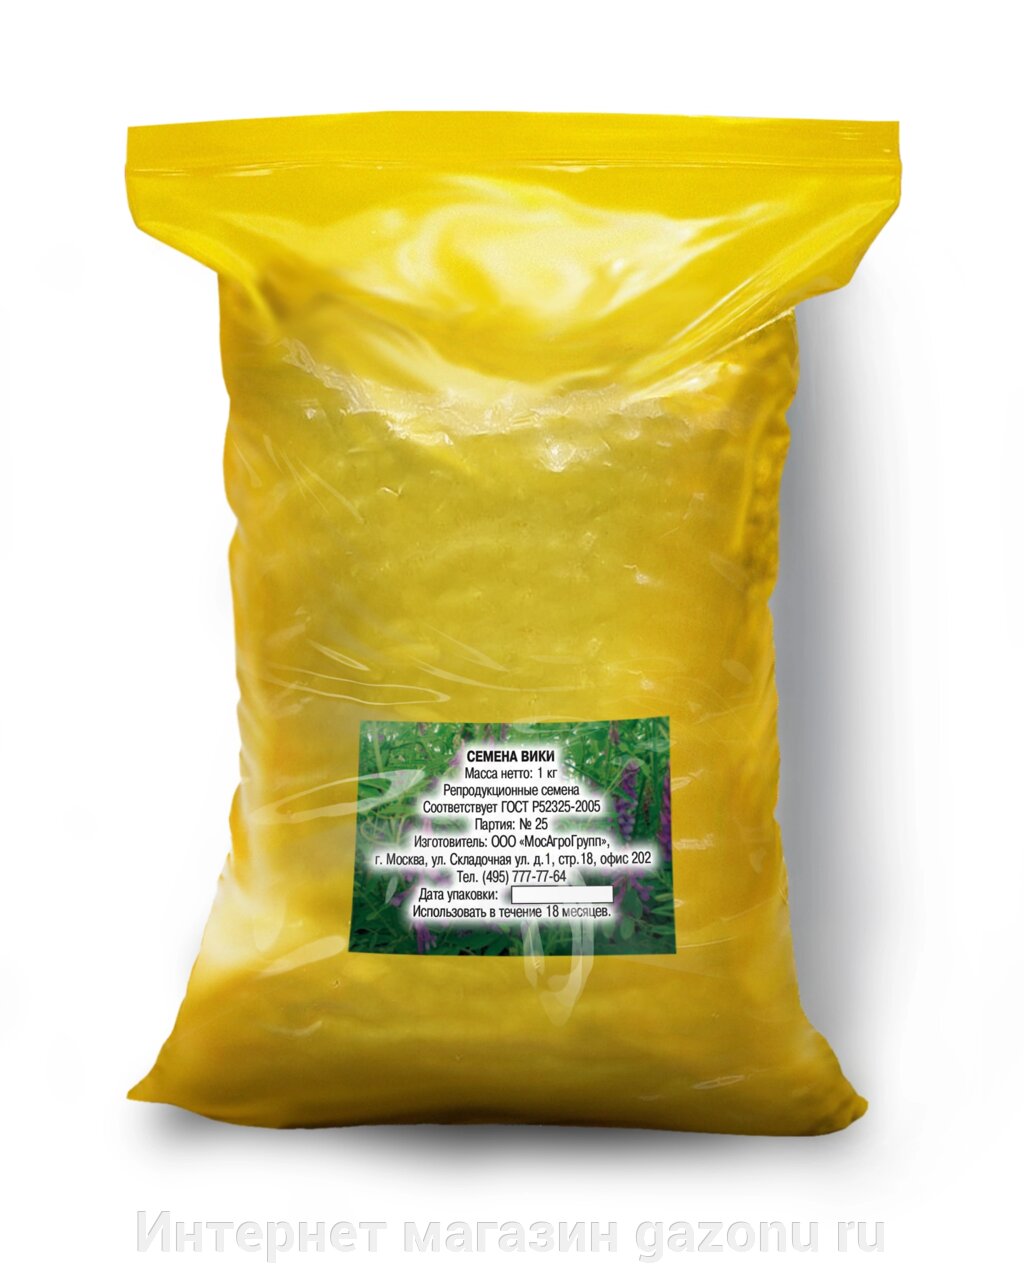 Семена вики яровой - 1 кг от компании Интернет магазин gazonu ru - фото 1